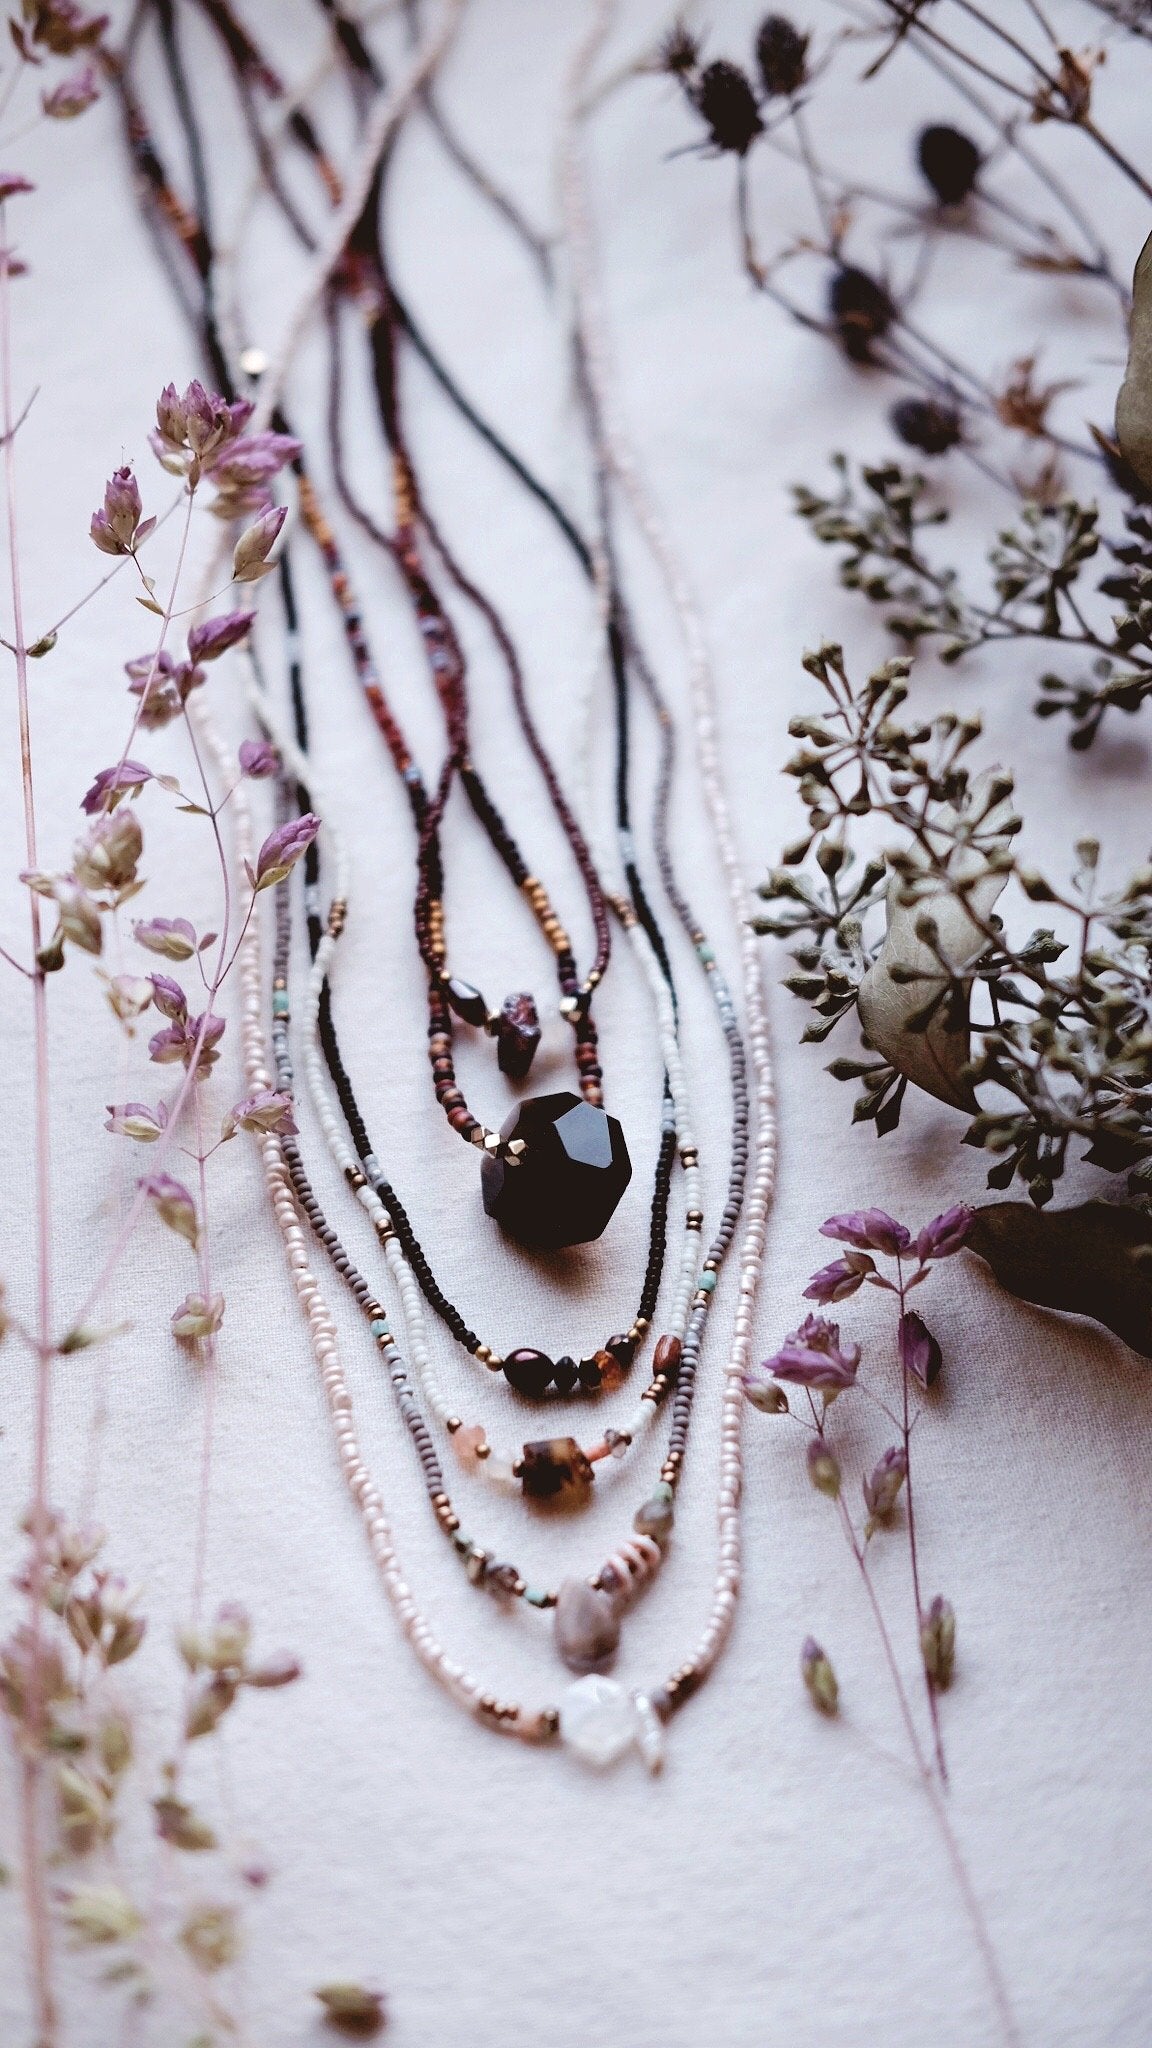 The Mystic + Spessartite Garnet + Freshwater Pearl + Jade + Pyrite + Spinel necklace